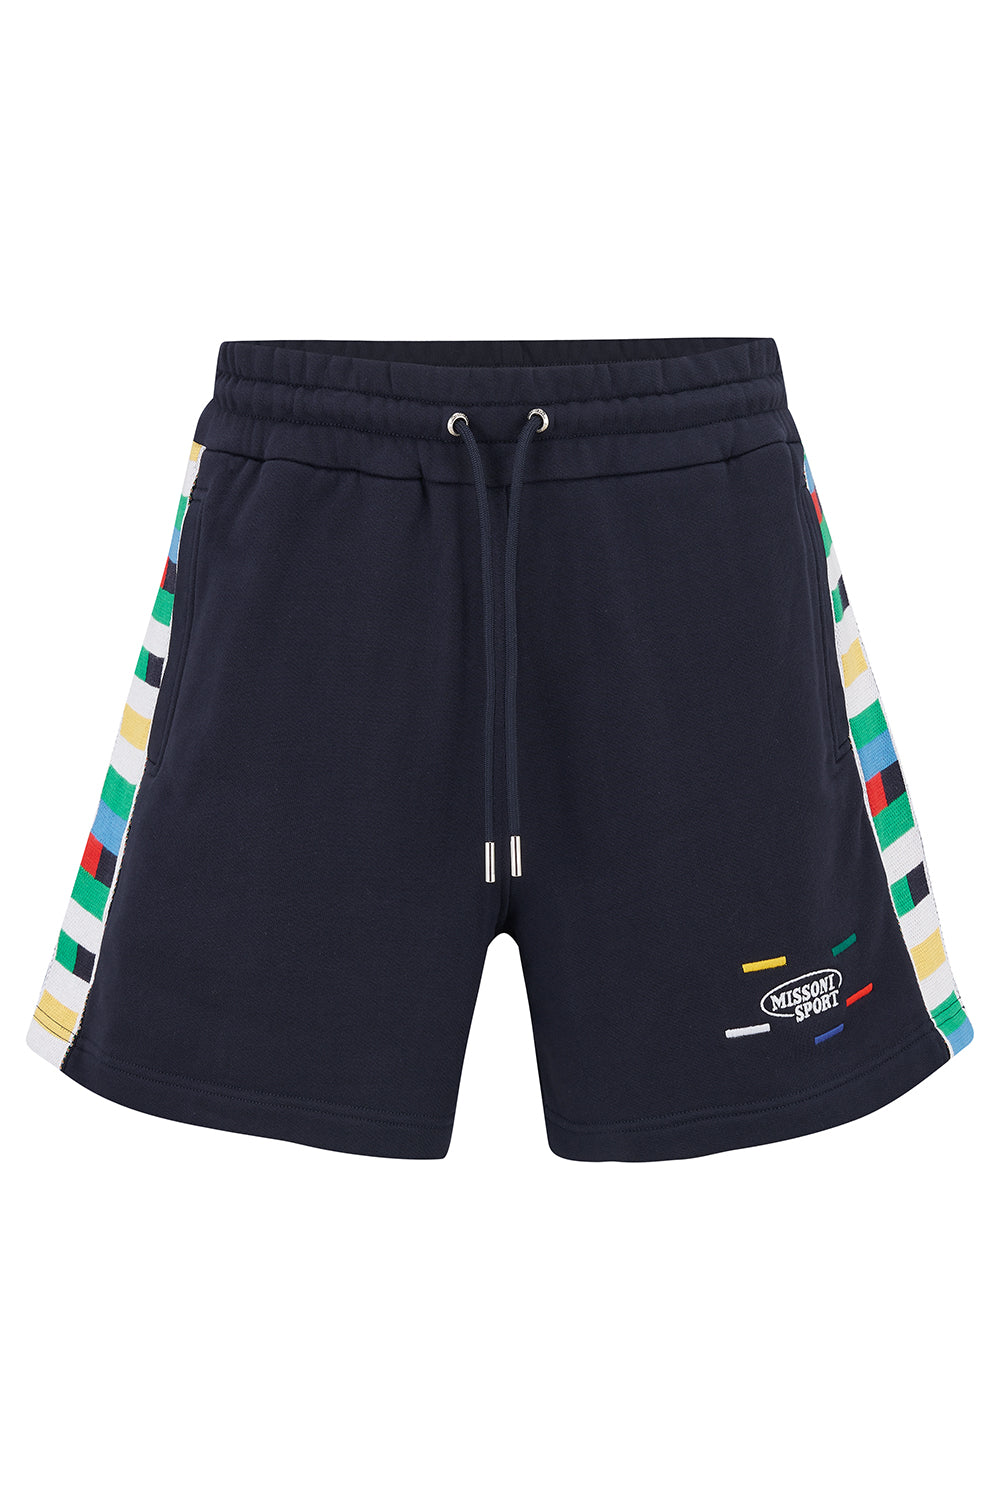 Missoni Men’s Shorts Navy - Front View